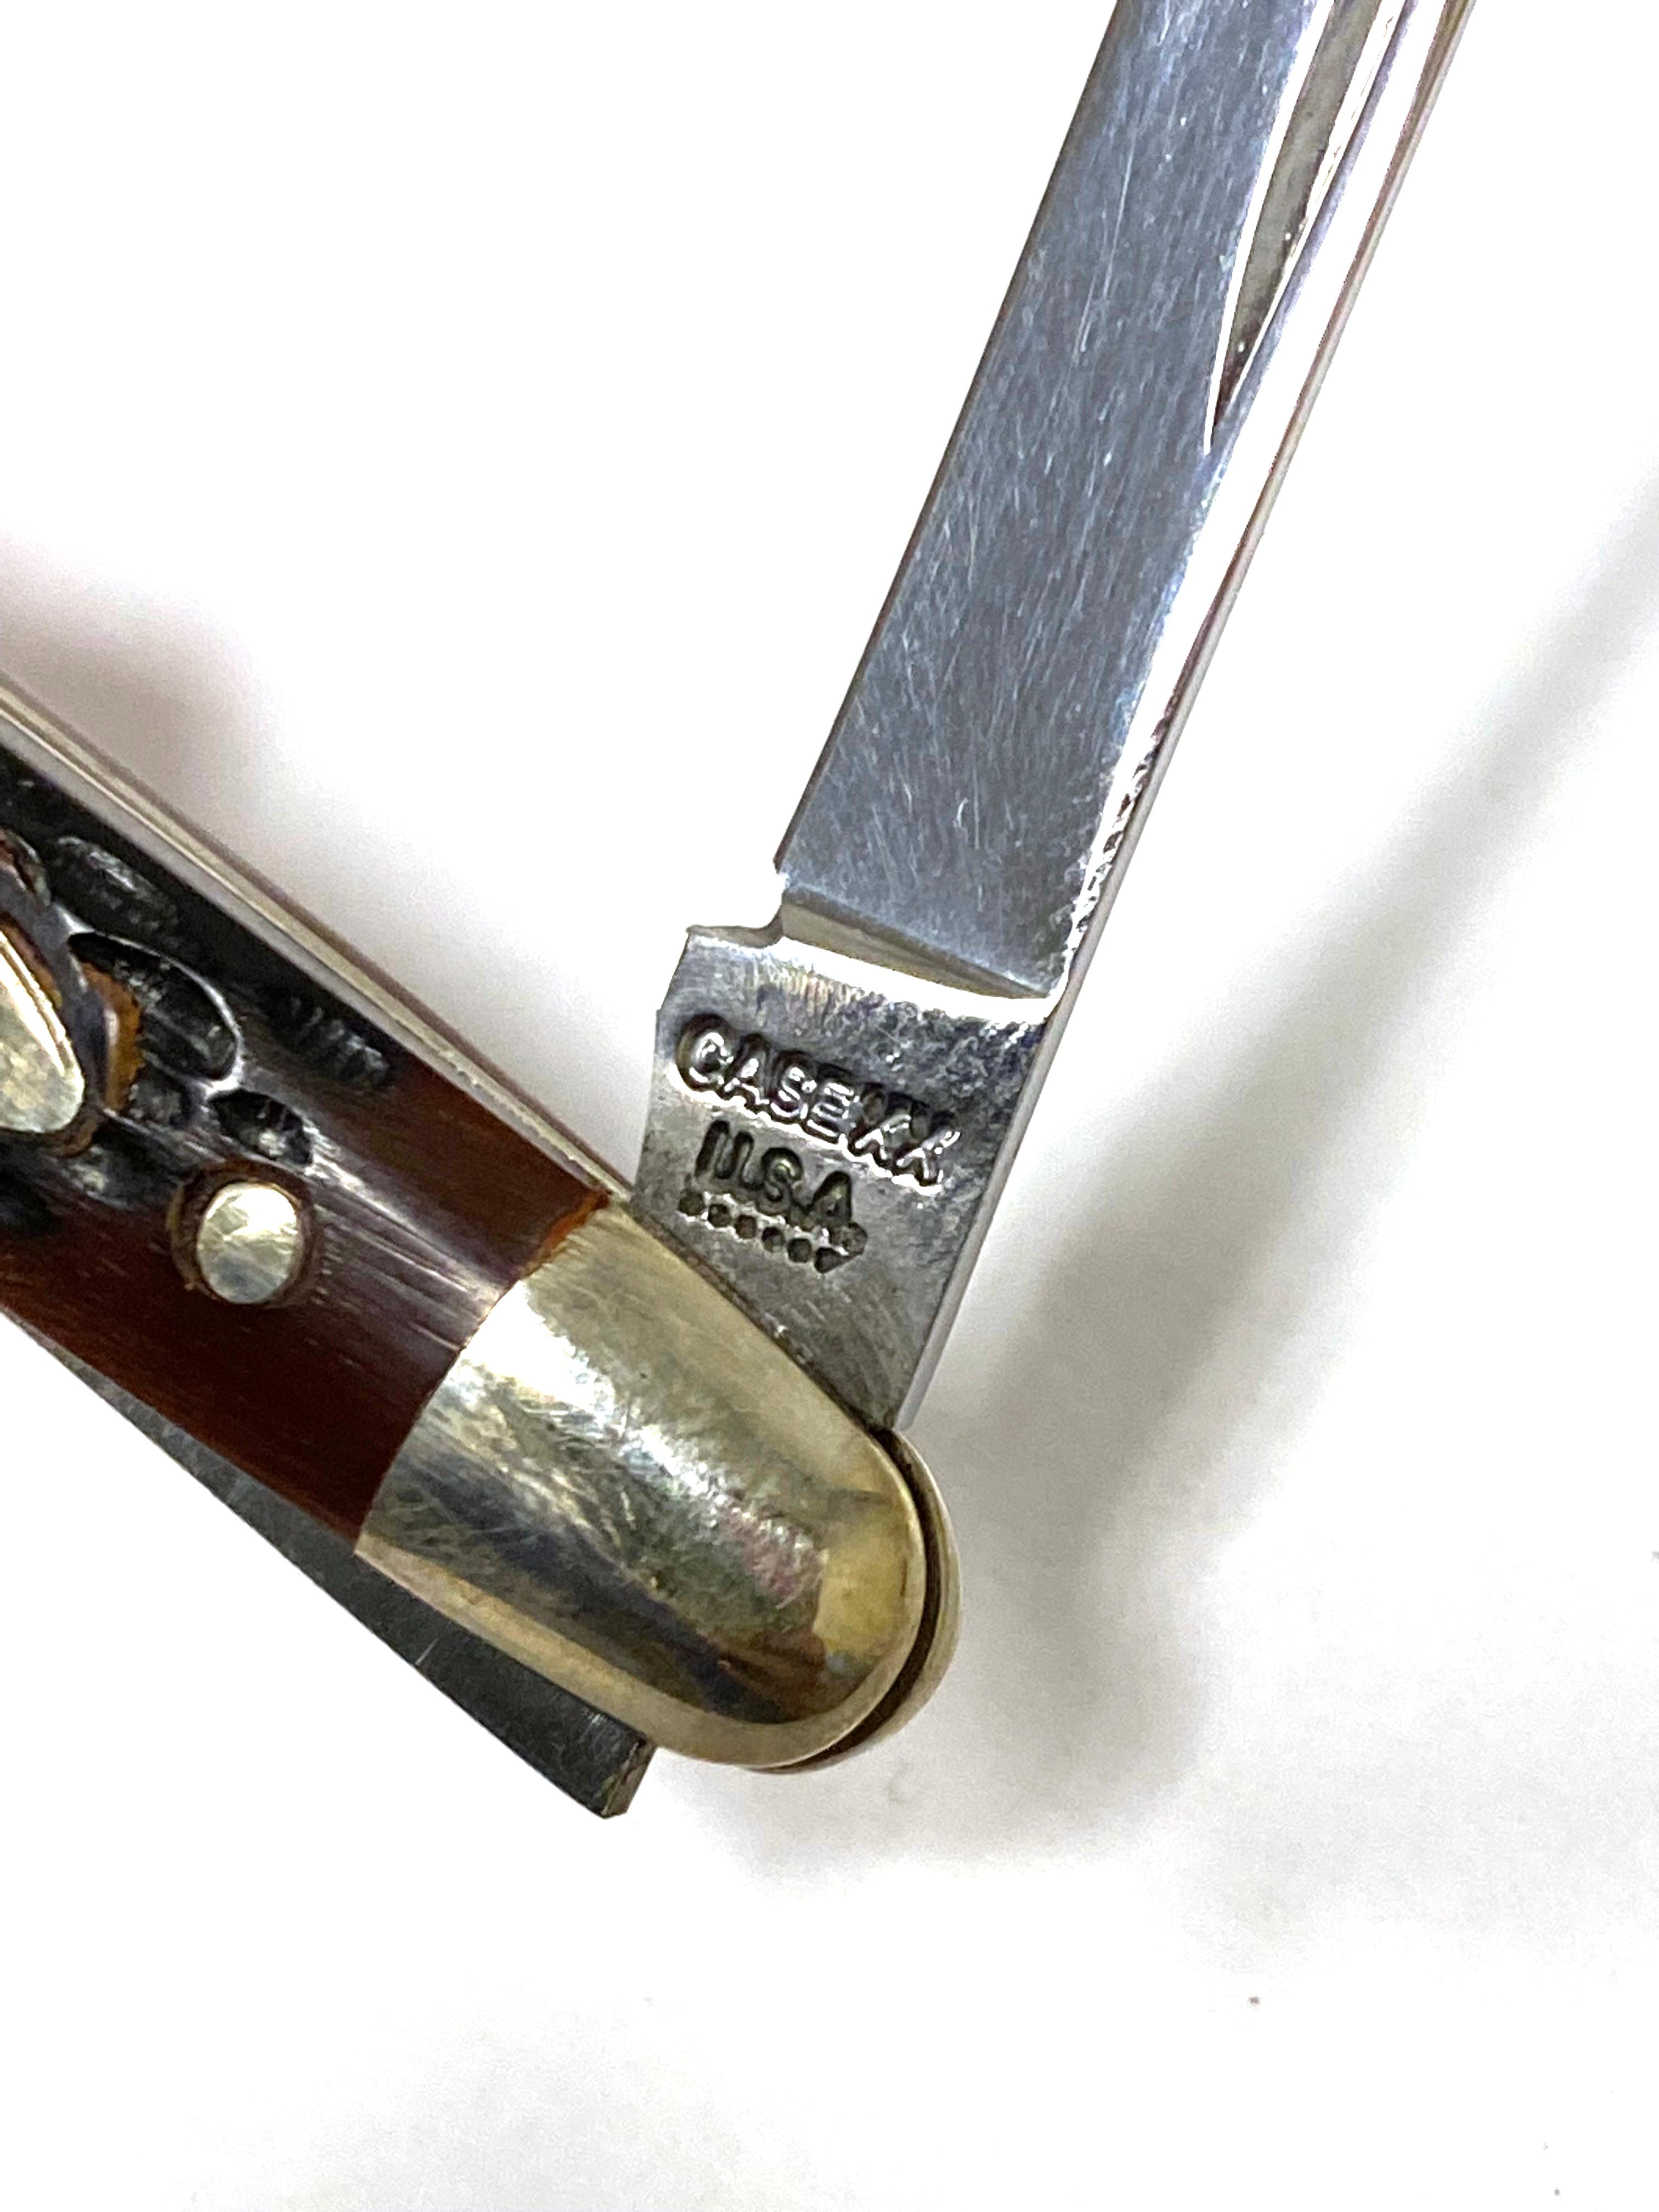 NIB Case XX 6201 Small Pen Knife in Factory Box